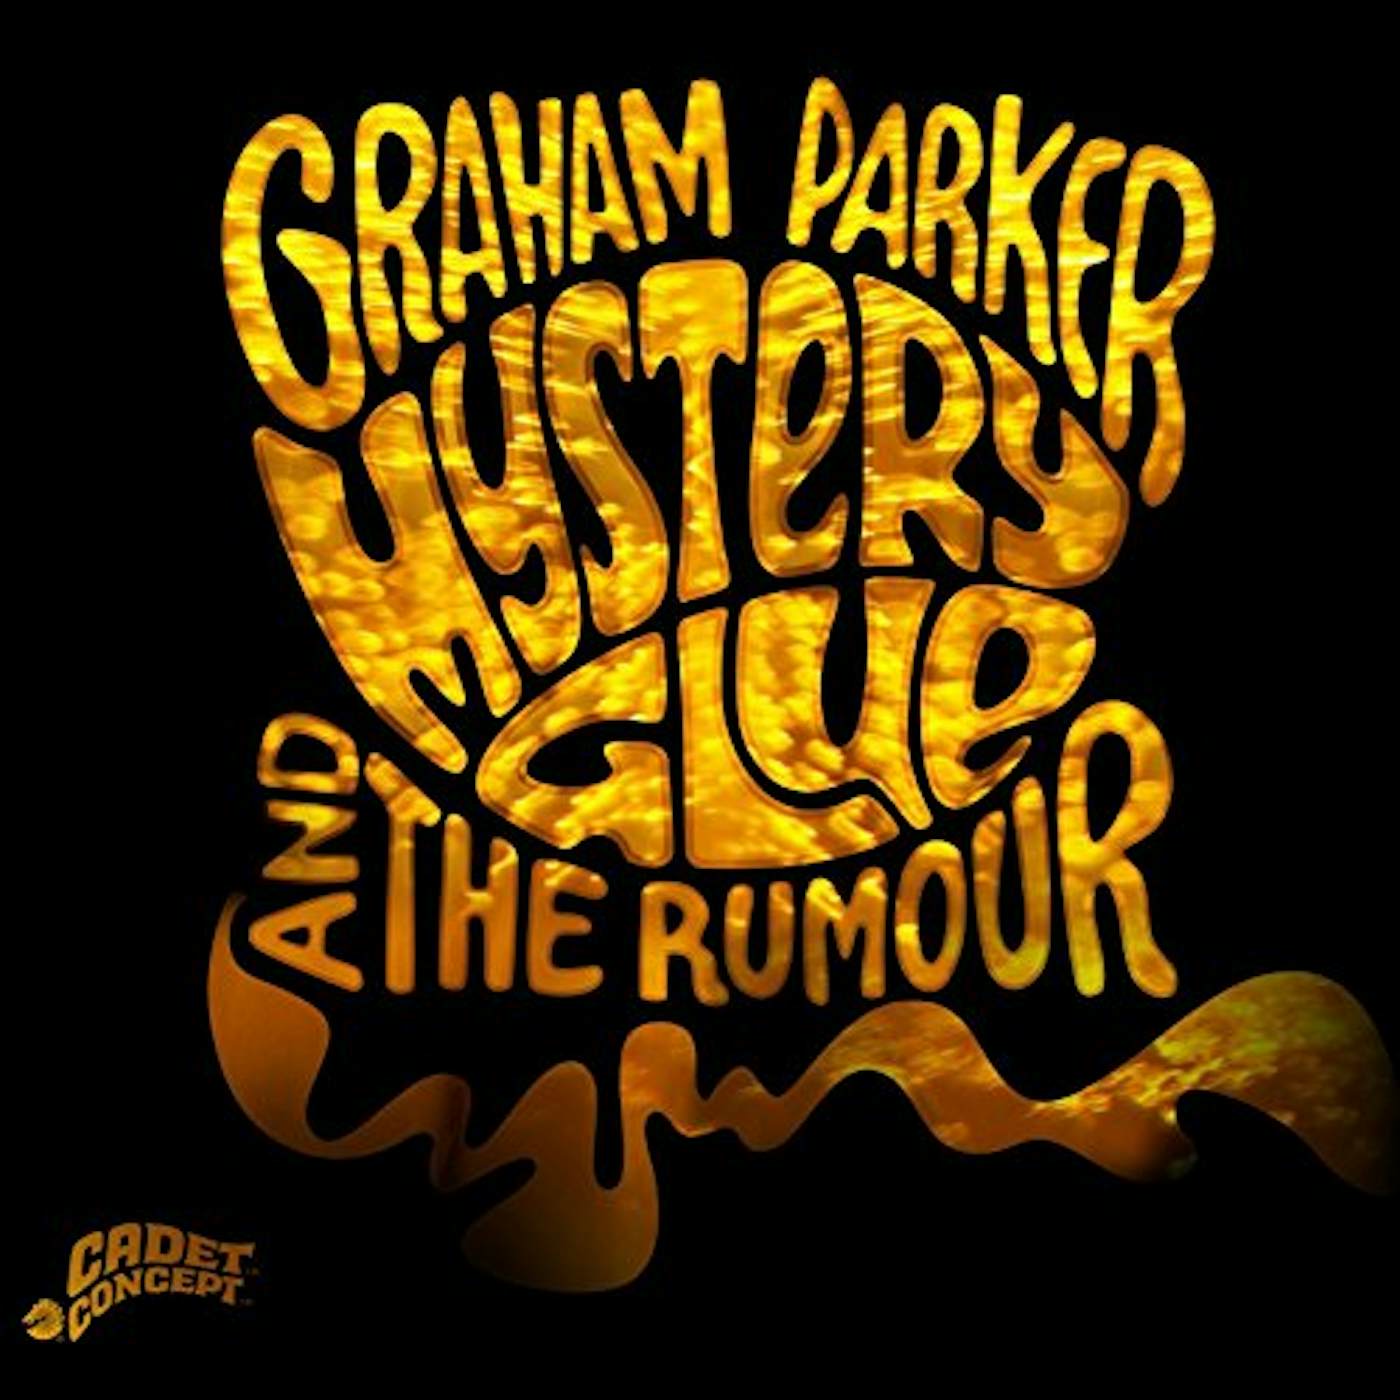 Graham Parker Mystery Glue Vinyl Record